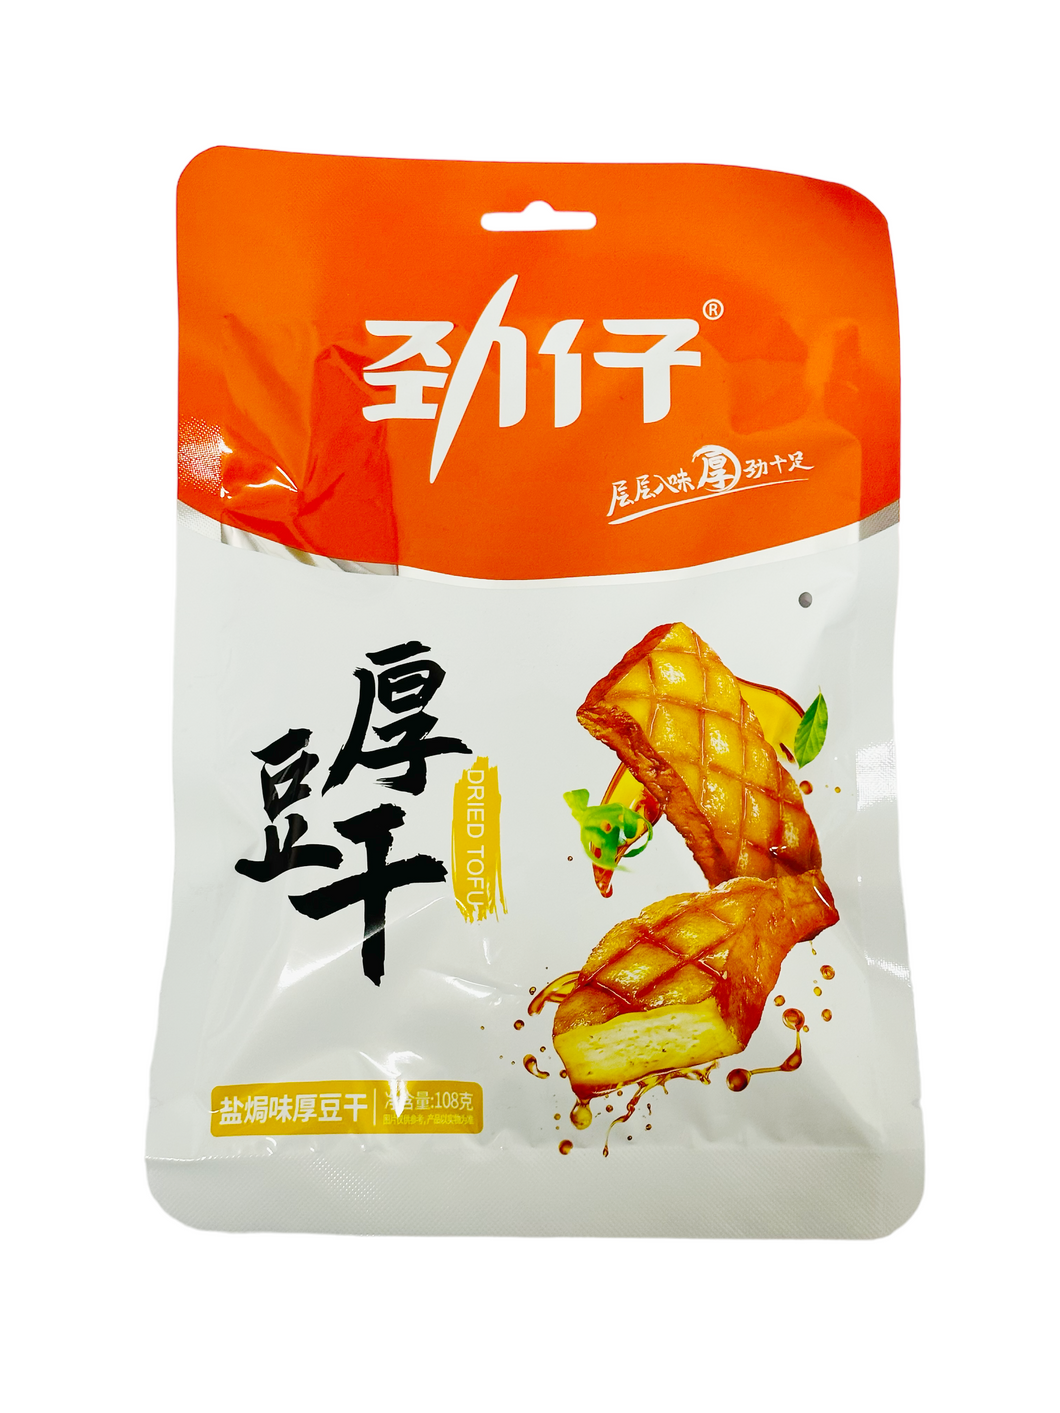 JZ Salt Baked Dried Tofu 108g劲仔盐焗豆干